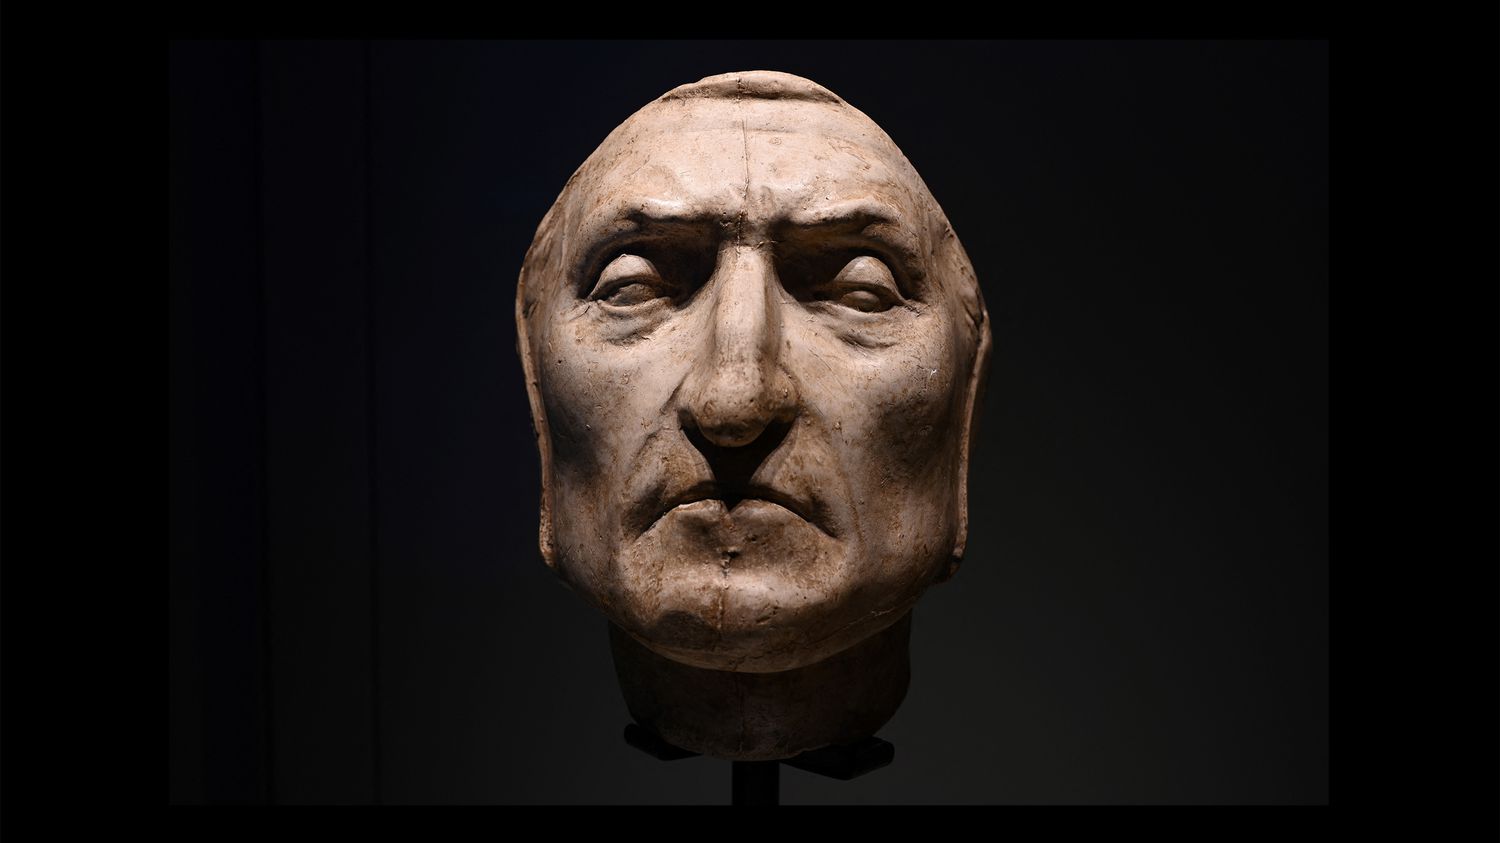 Le masque mortuaire, en marbre, du poète Dante Alighieri